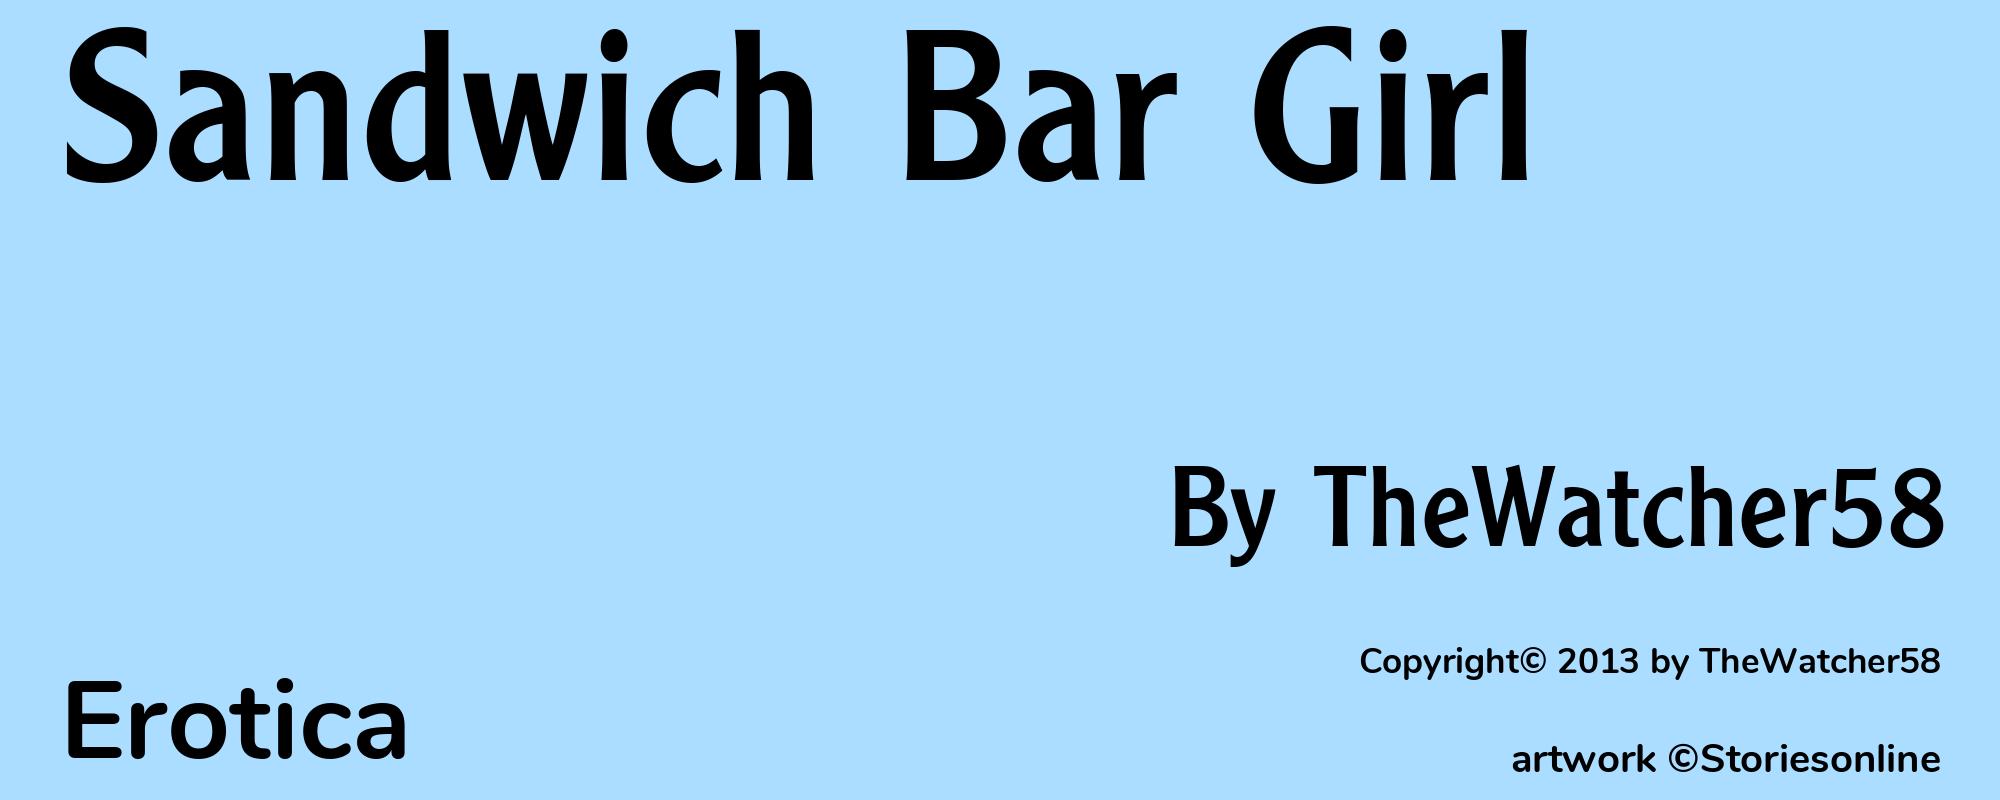 Sandwich Bar Girl - Cover